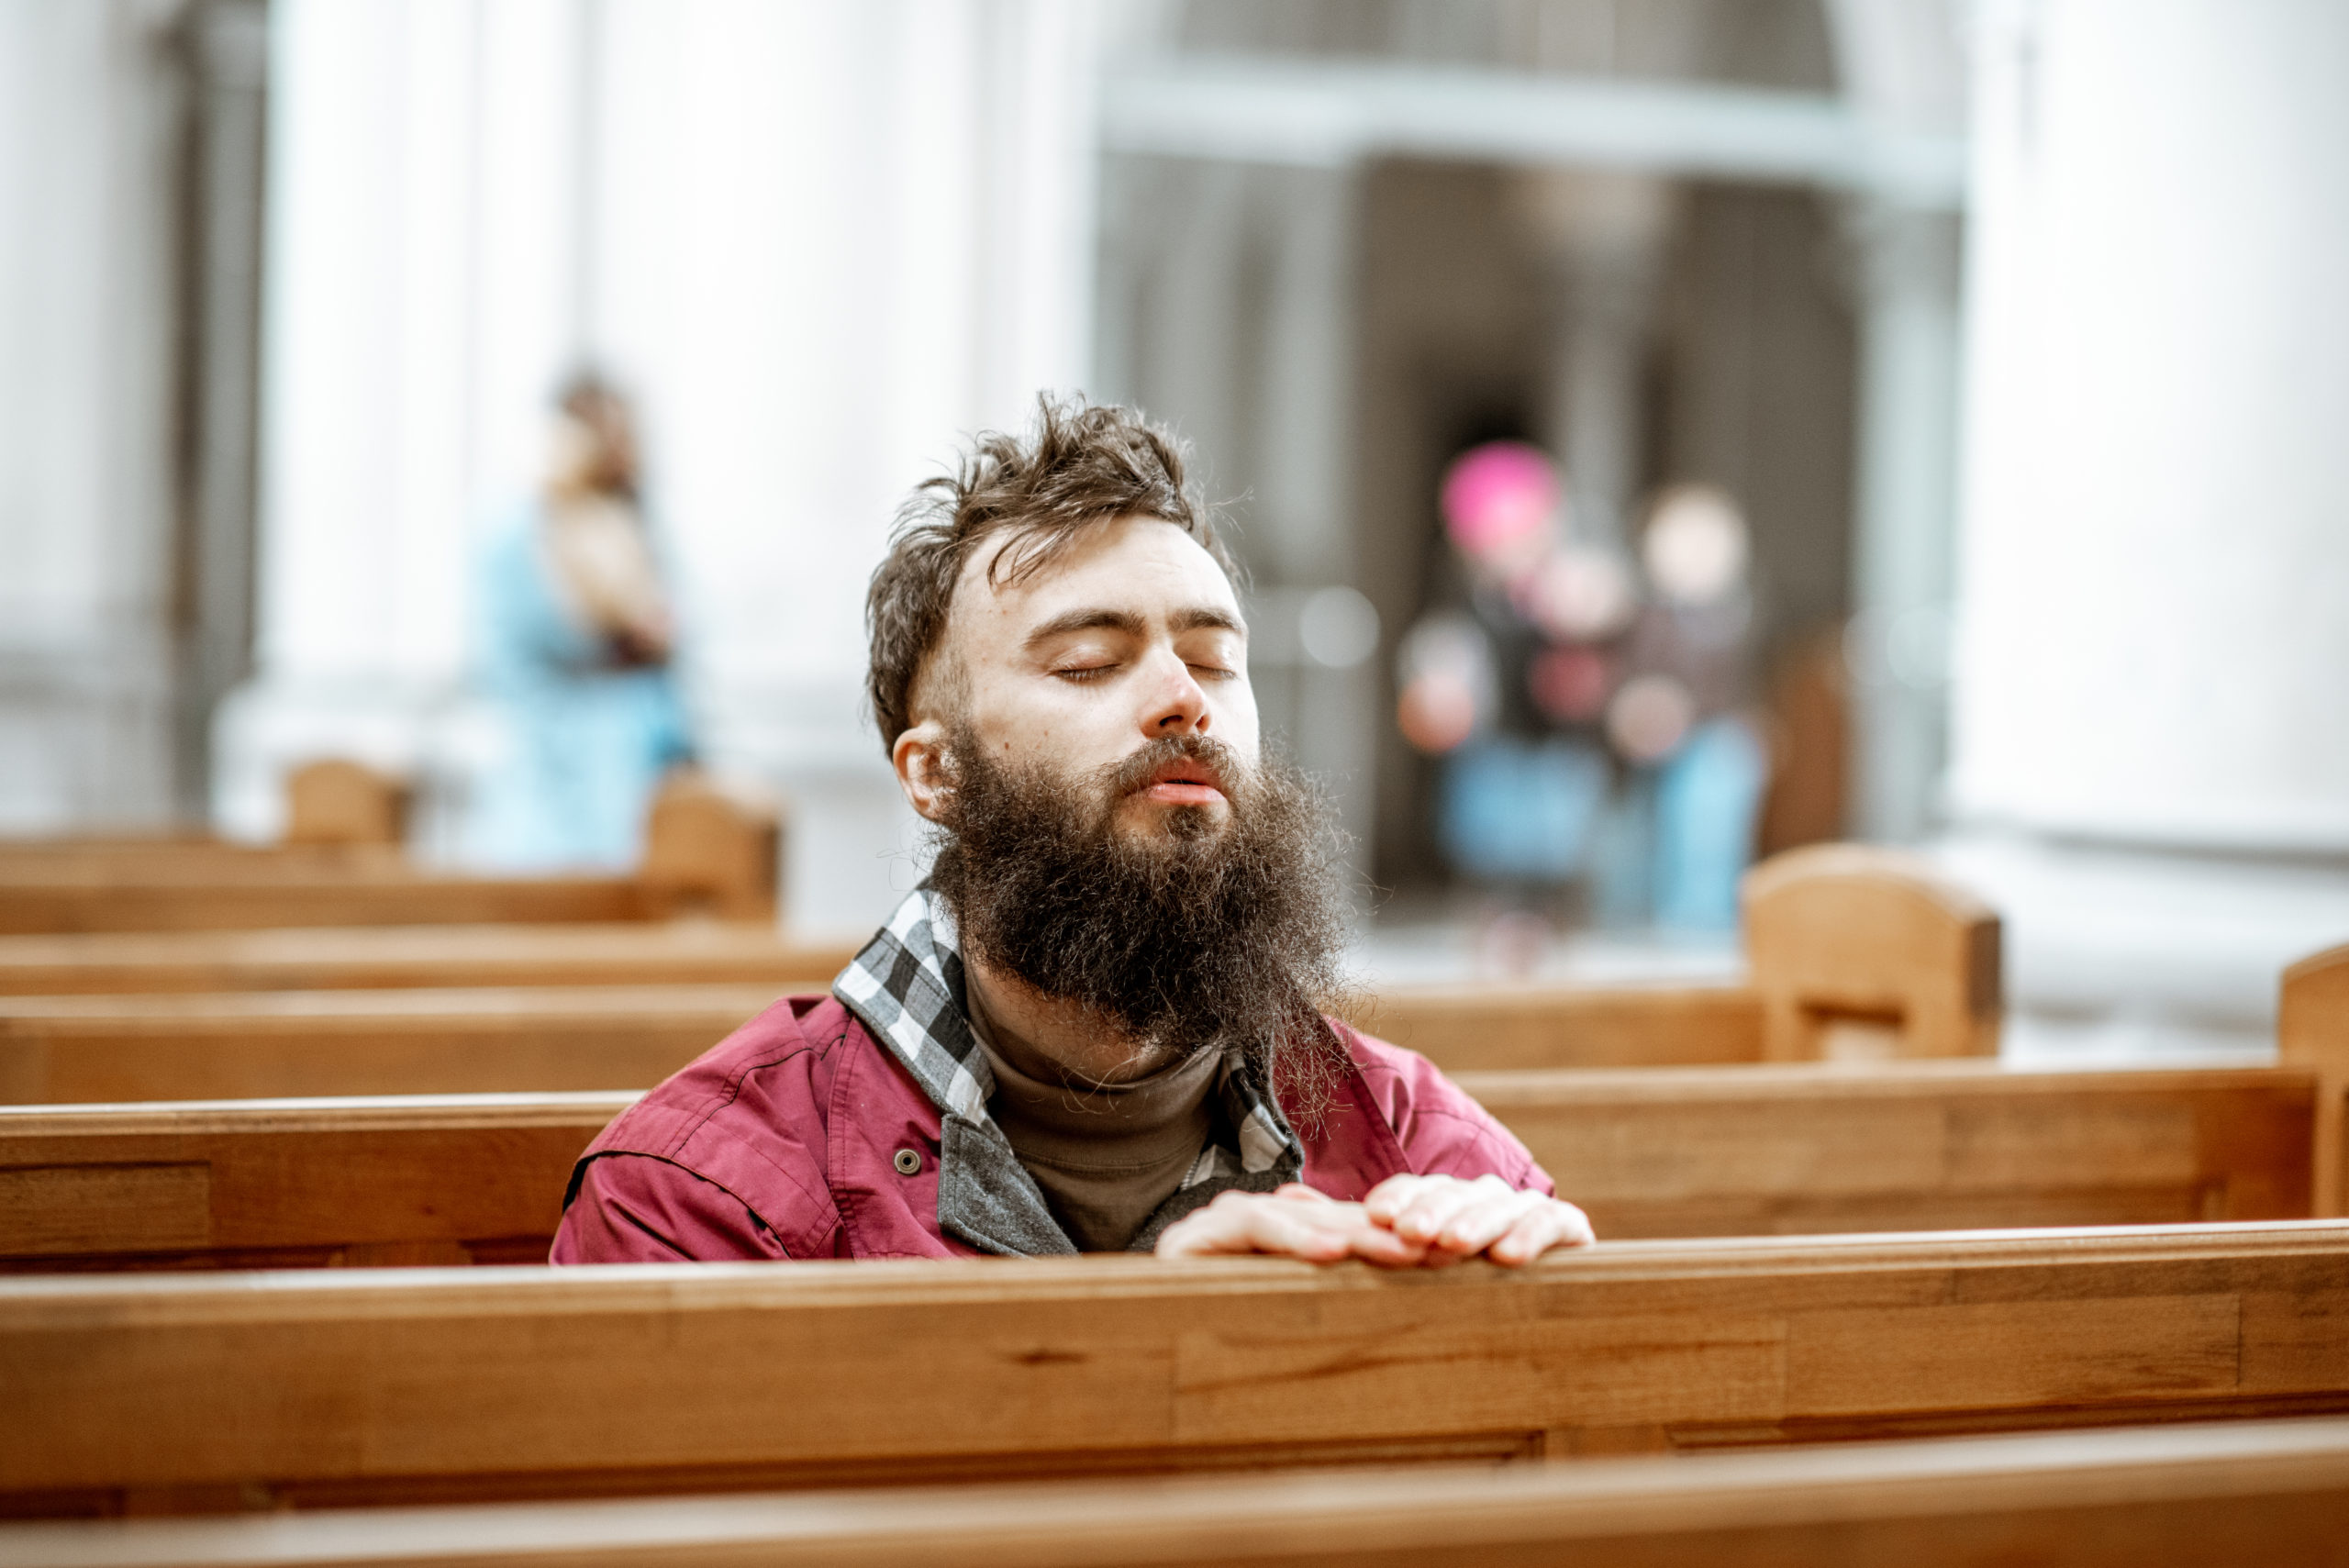 Man praying in the church